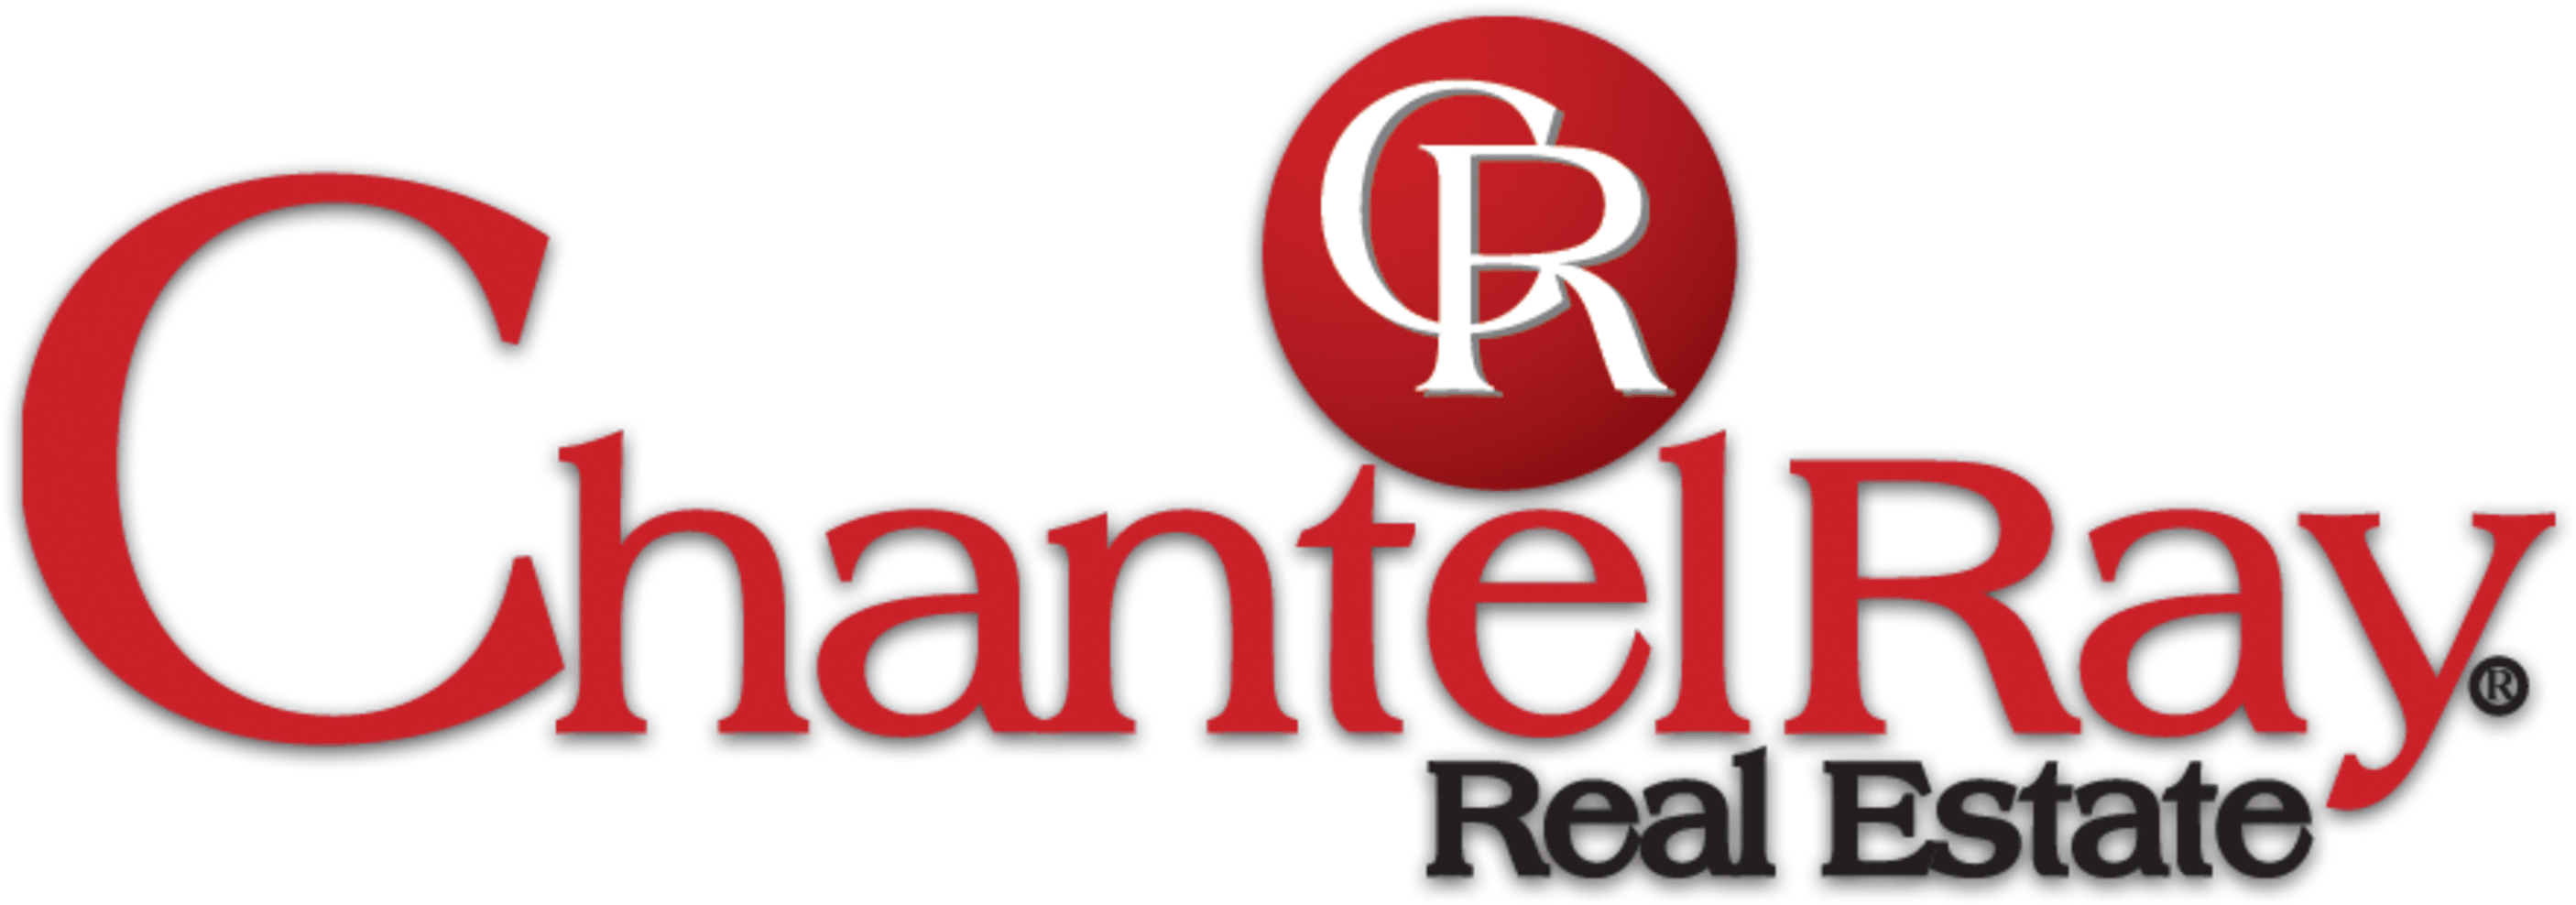 Margaret Ramsey, Managing Broker - Chantel Ray Real Estate Clipart (3840x1280), Png Download